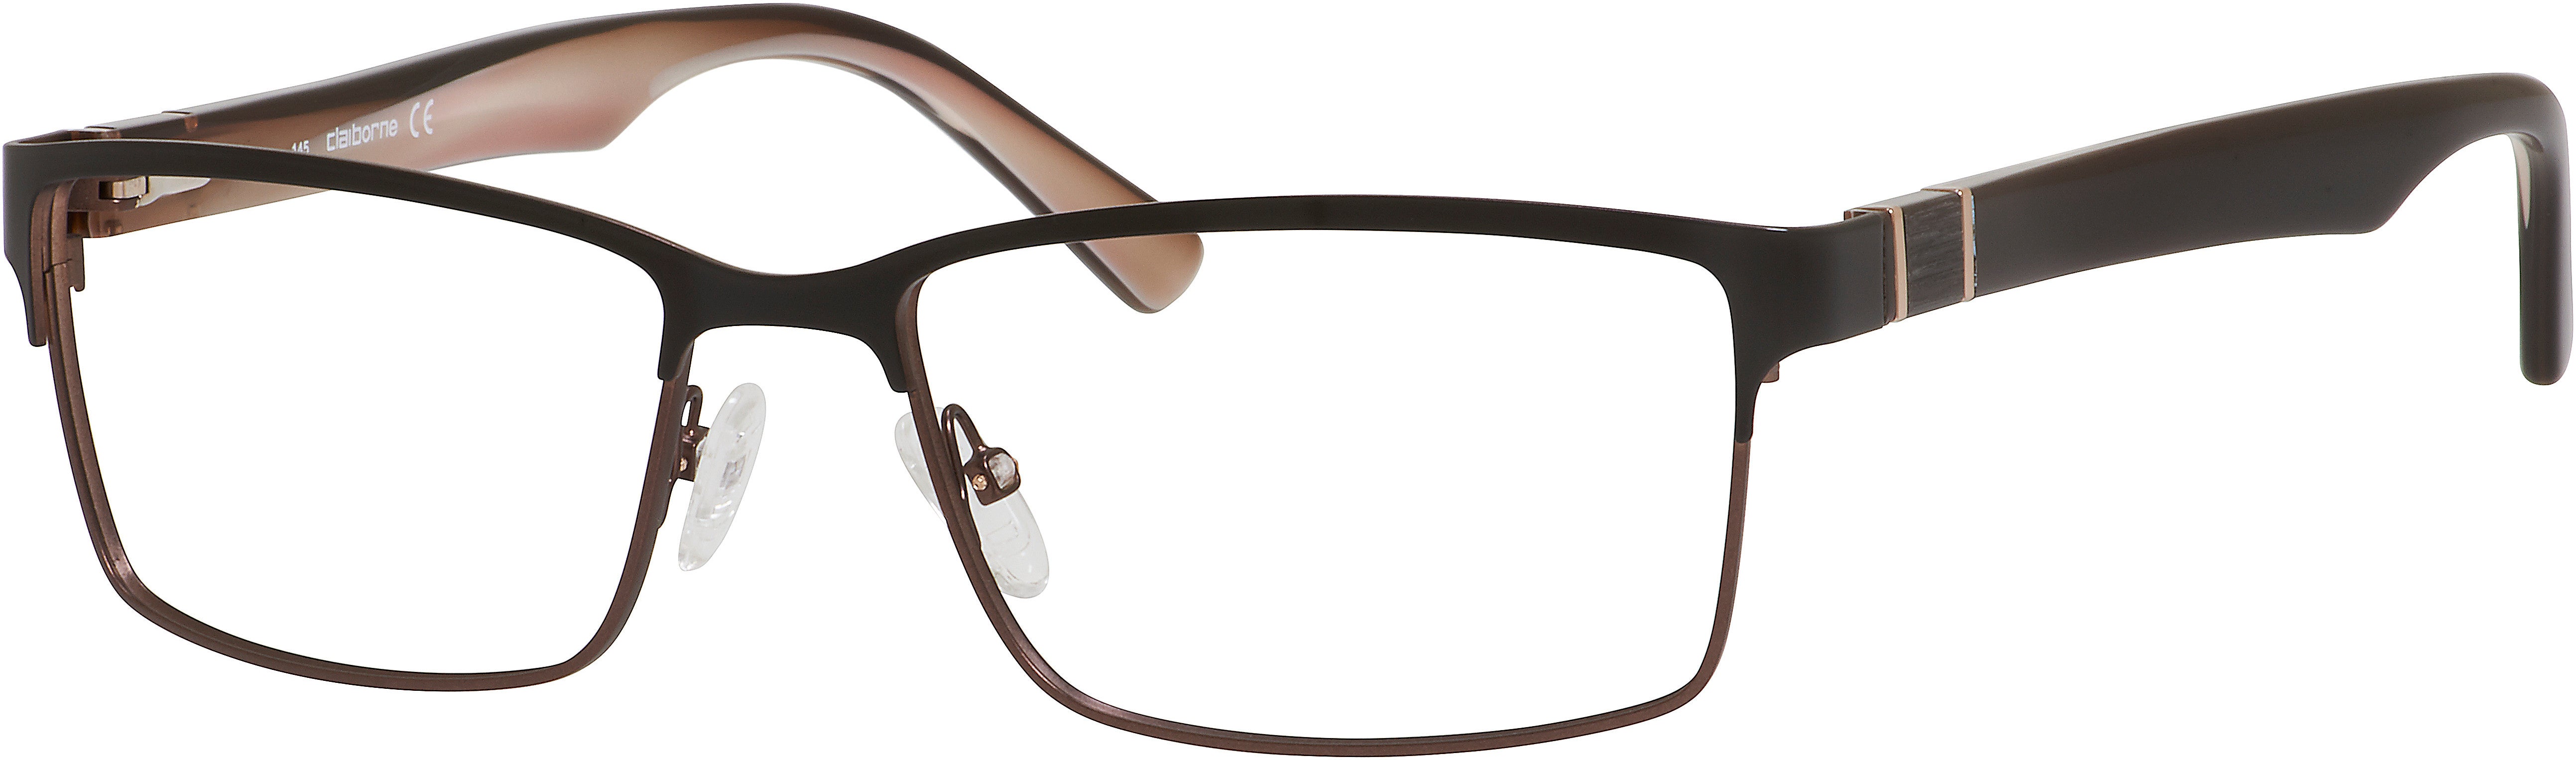  Claiborne 219 Rectangular Eyeglasses 0CG4-0CG4  Brown Smoke (00 Demo Lens)